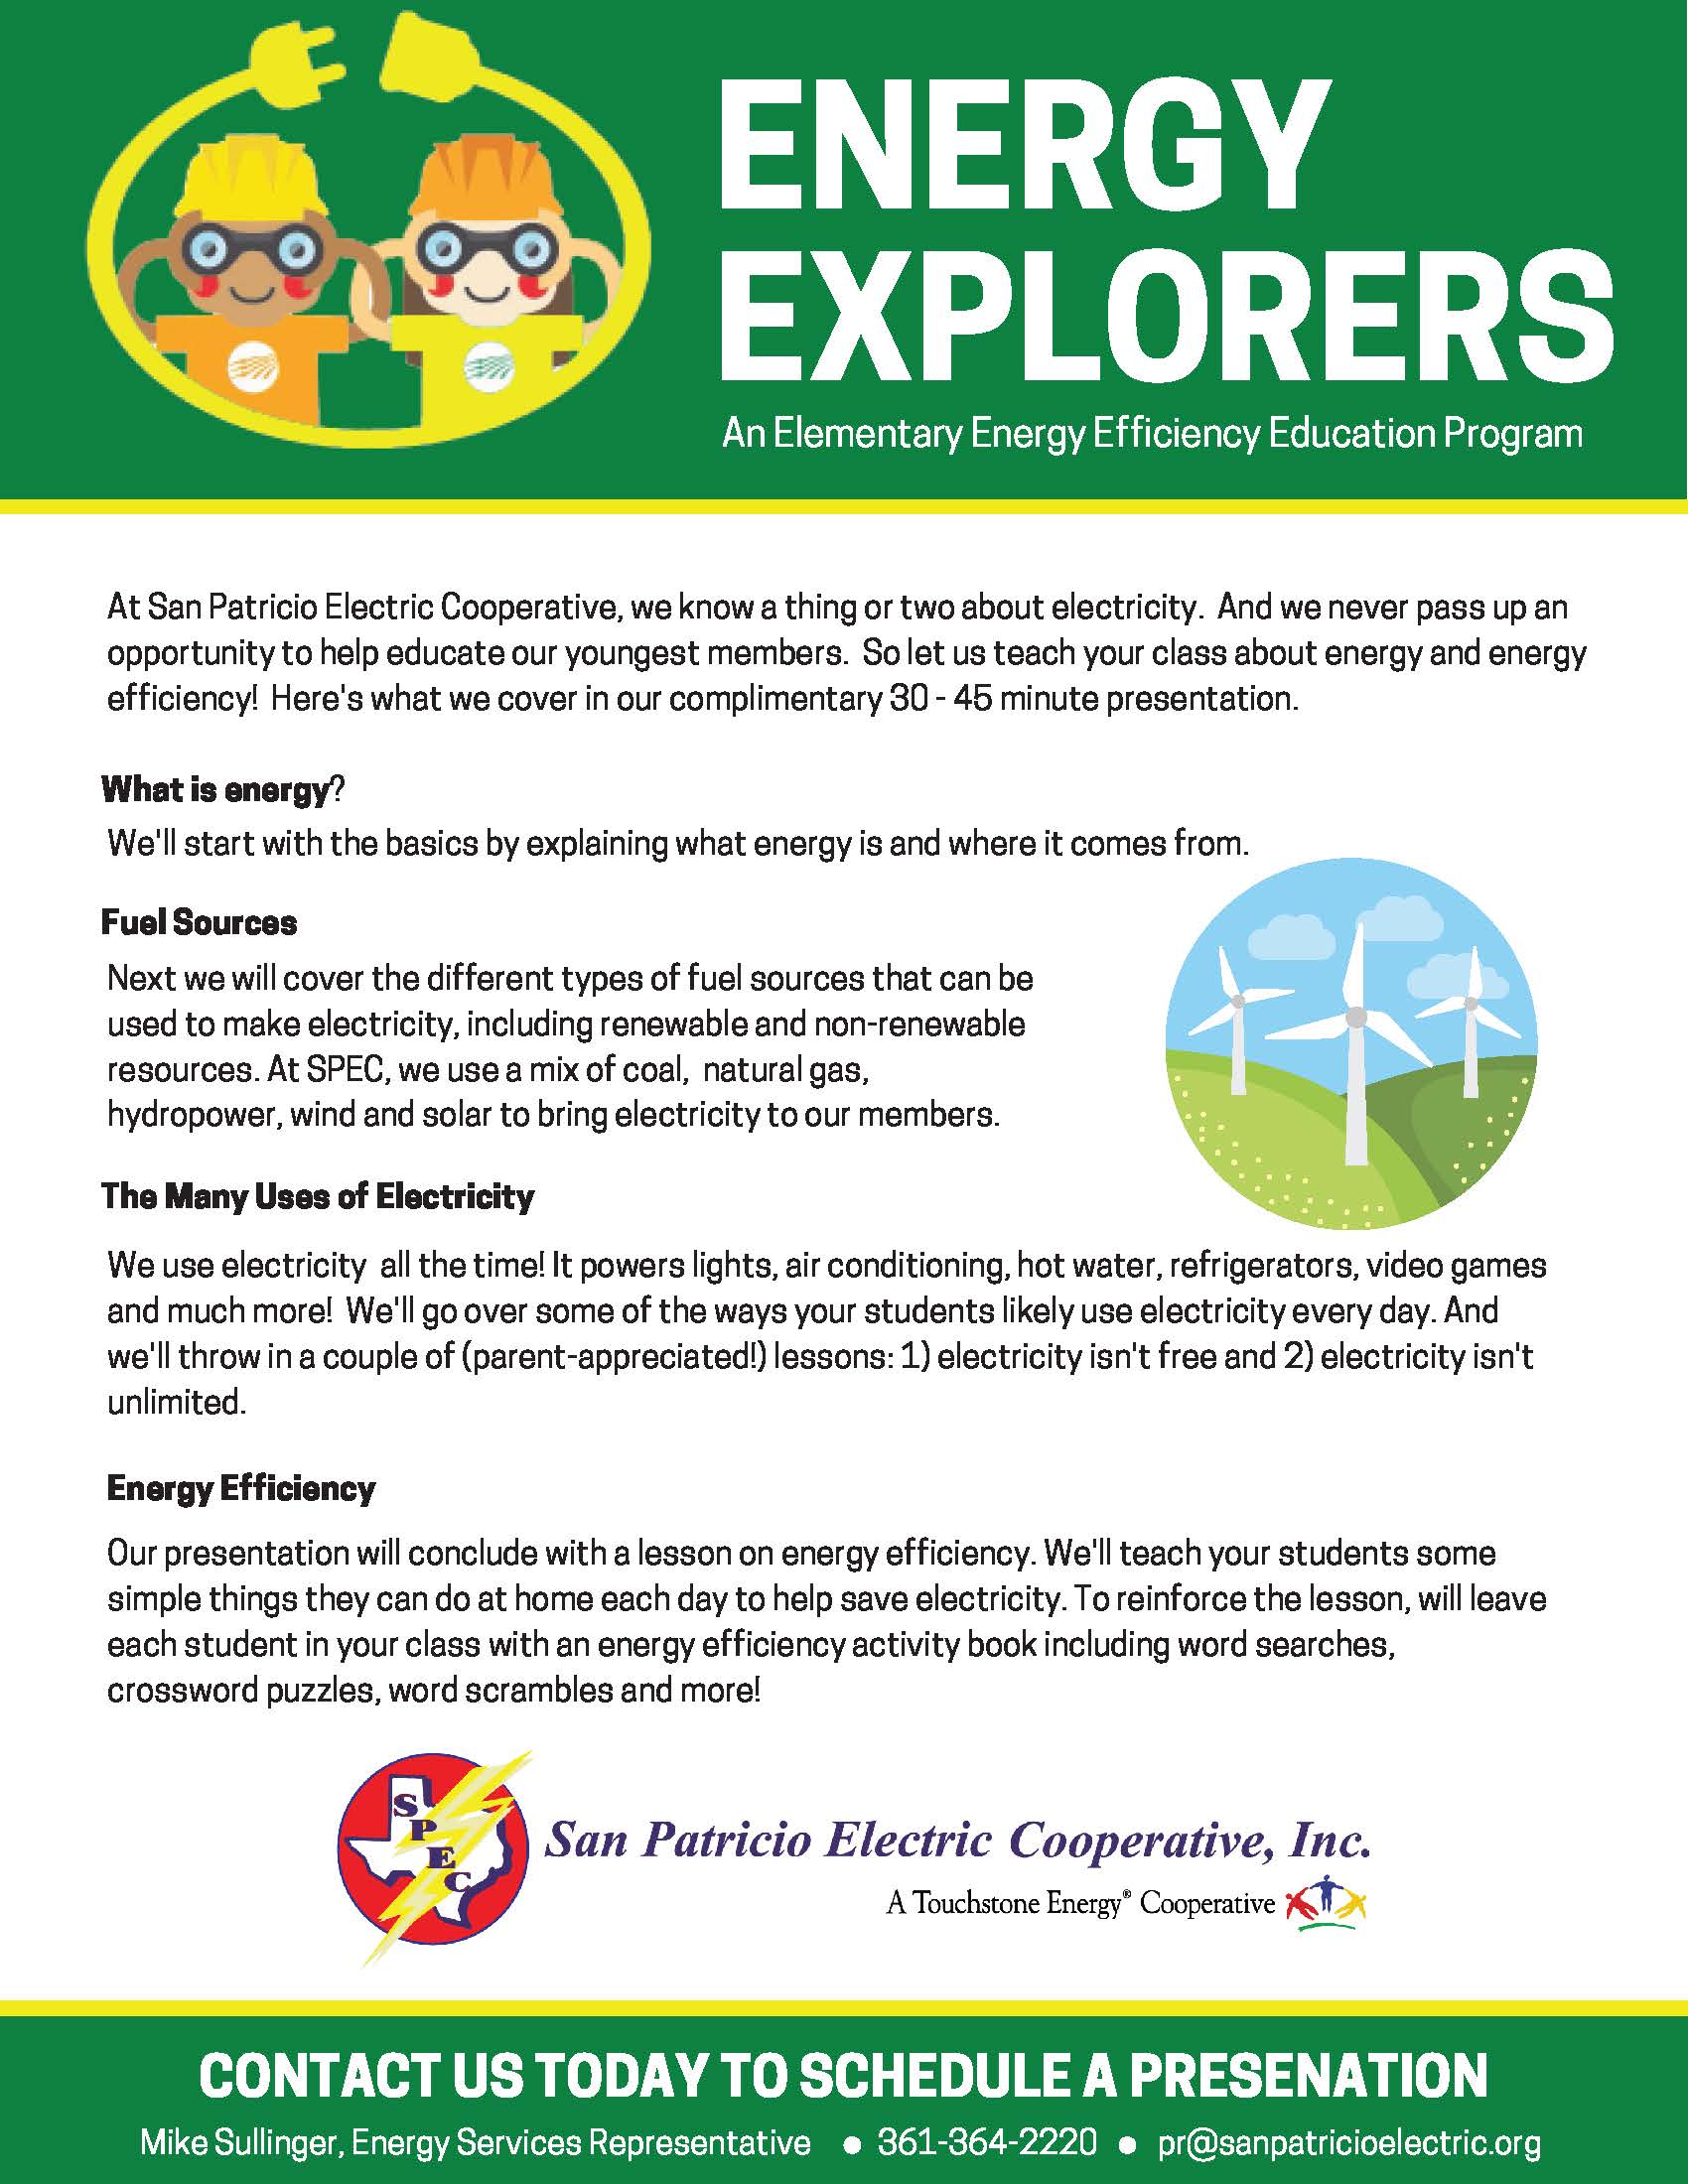 Energy Efficiency Education Program for Elementary Students